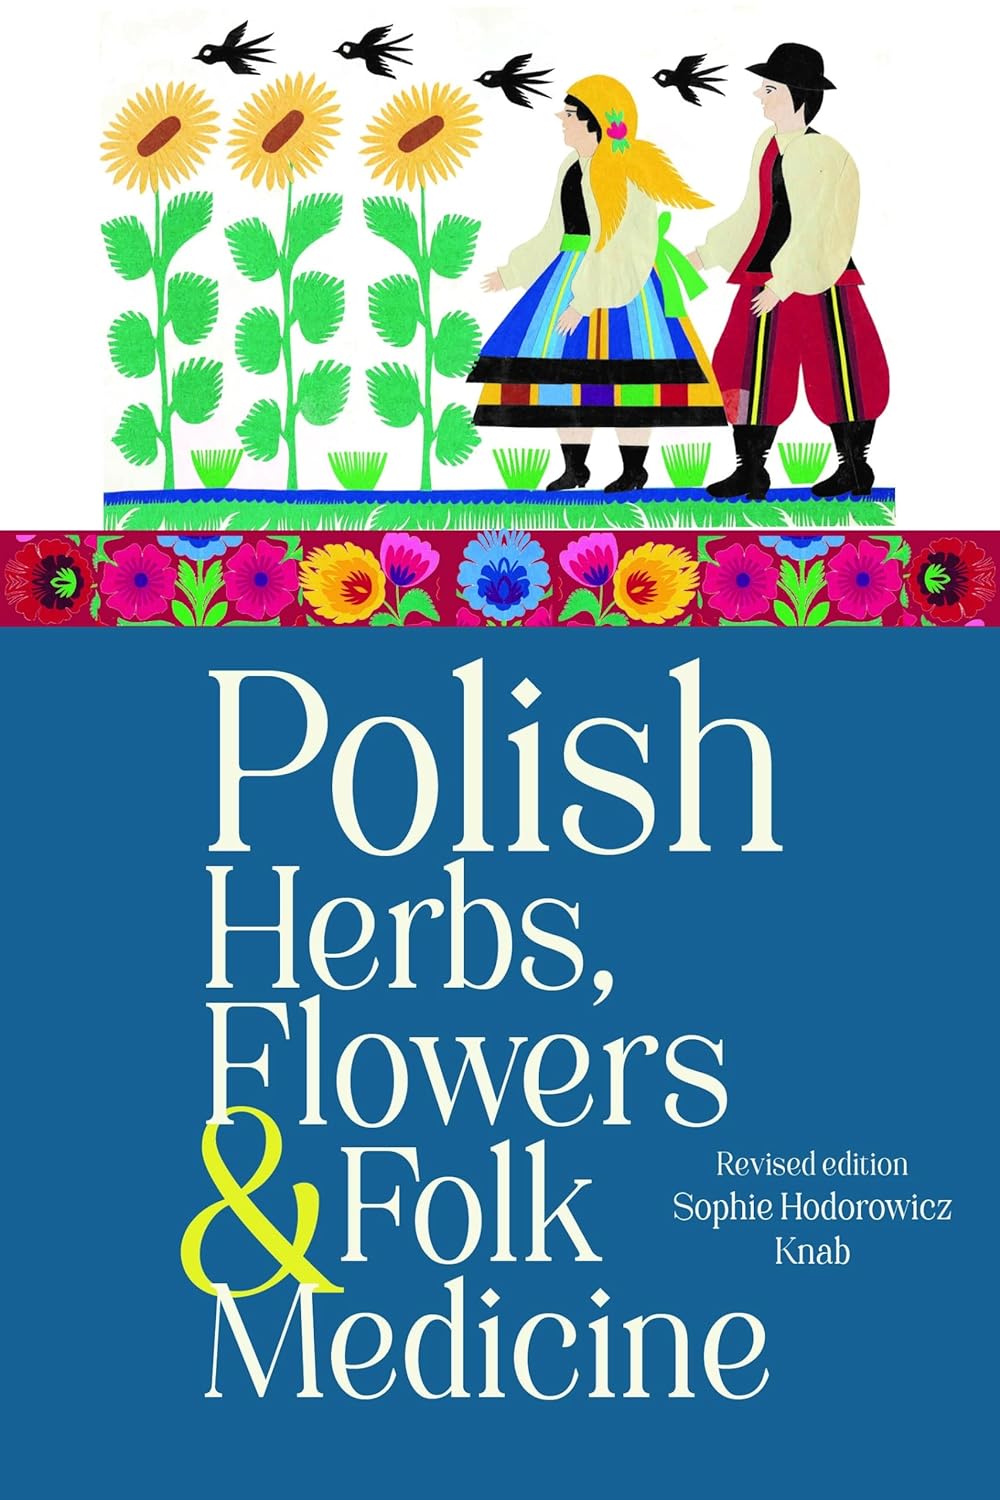 Polish Herbs, Flowers & Folk Medicine: Revised Edition (Sophie Hodorowicz Knab)